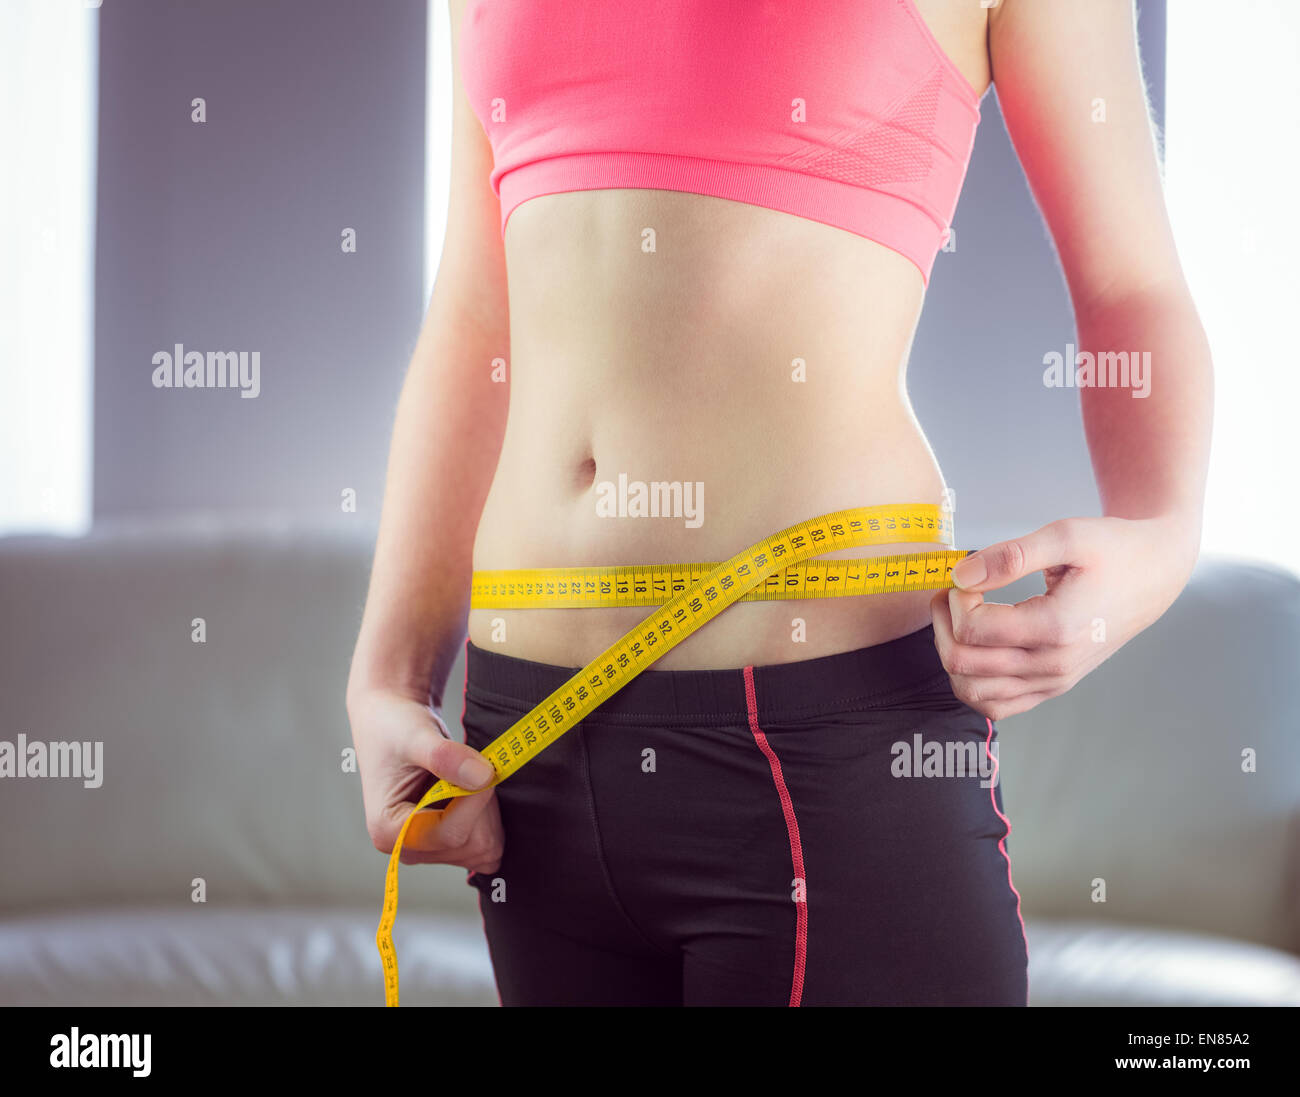 Female Body Measurement Tape Stock Photo 57150043